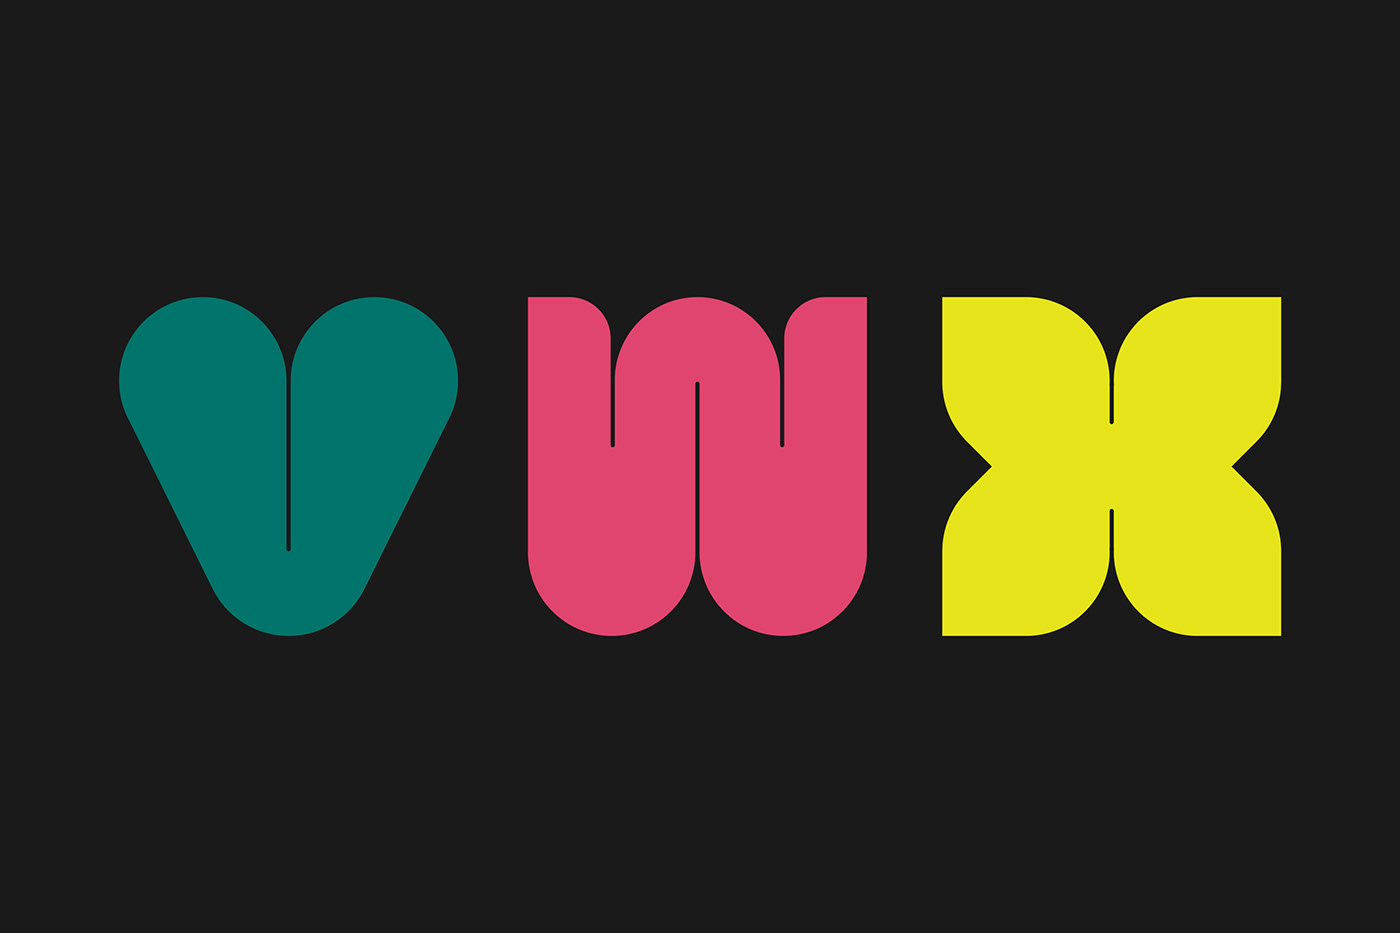 VWX in Tanga font designed by Deborah Ranzetta